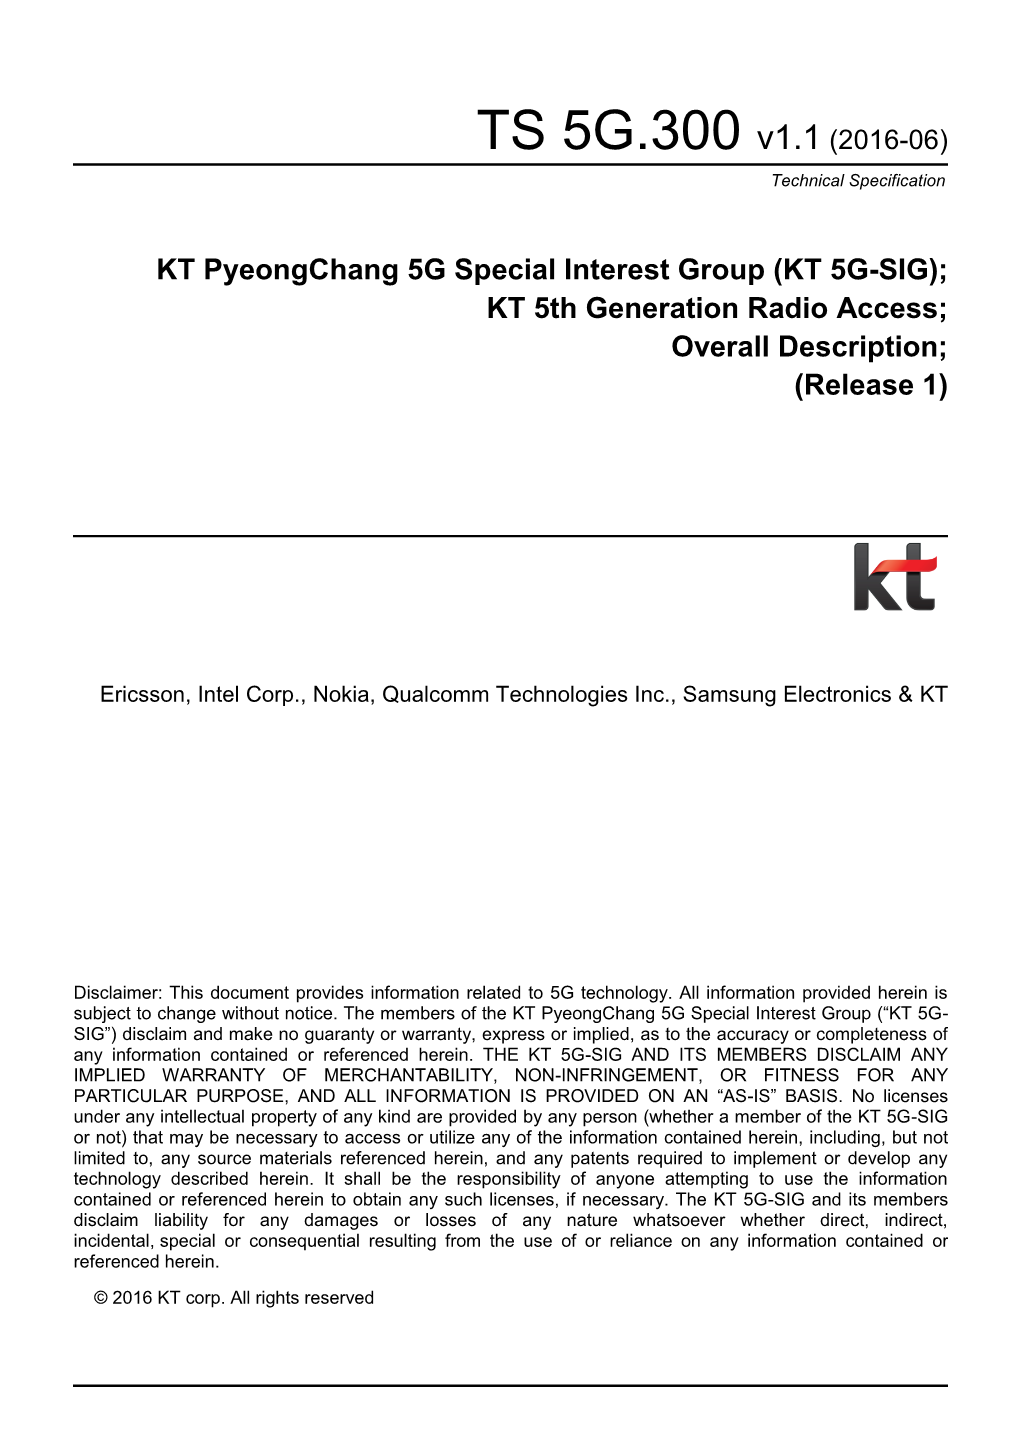 TS 5G.300 V1.1 (2016-06) Technical Specification